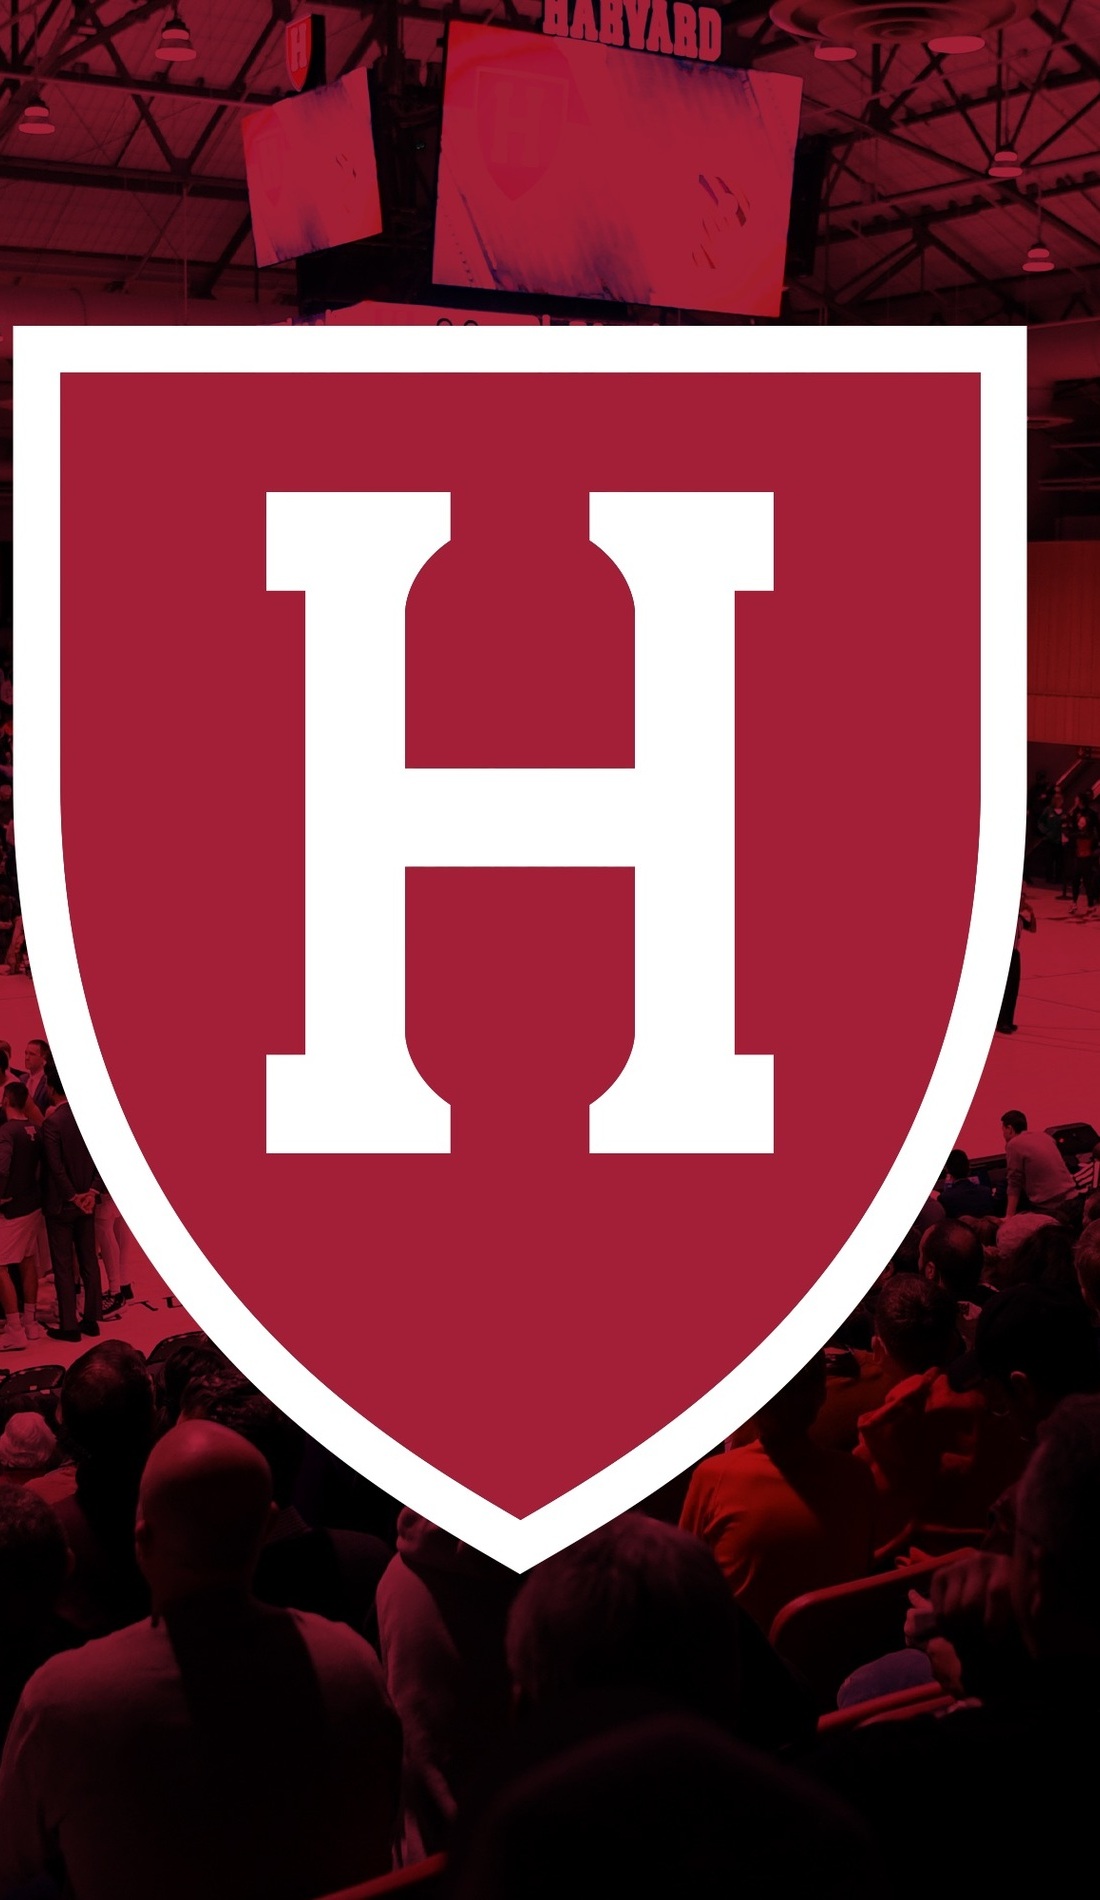 A Harvard Crimson Basketball live event